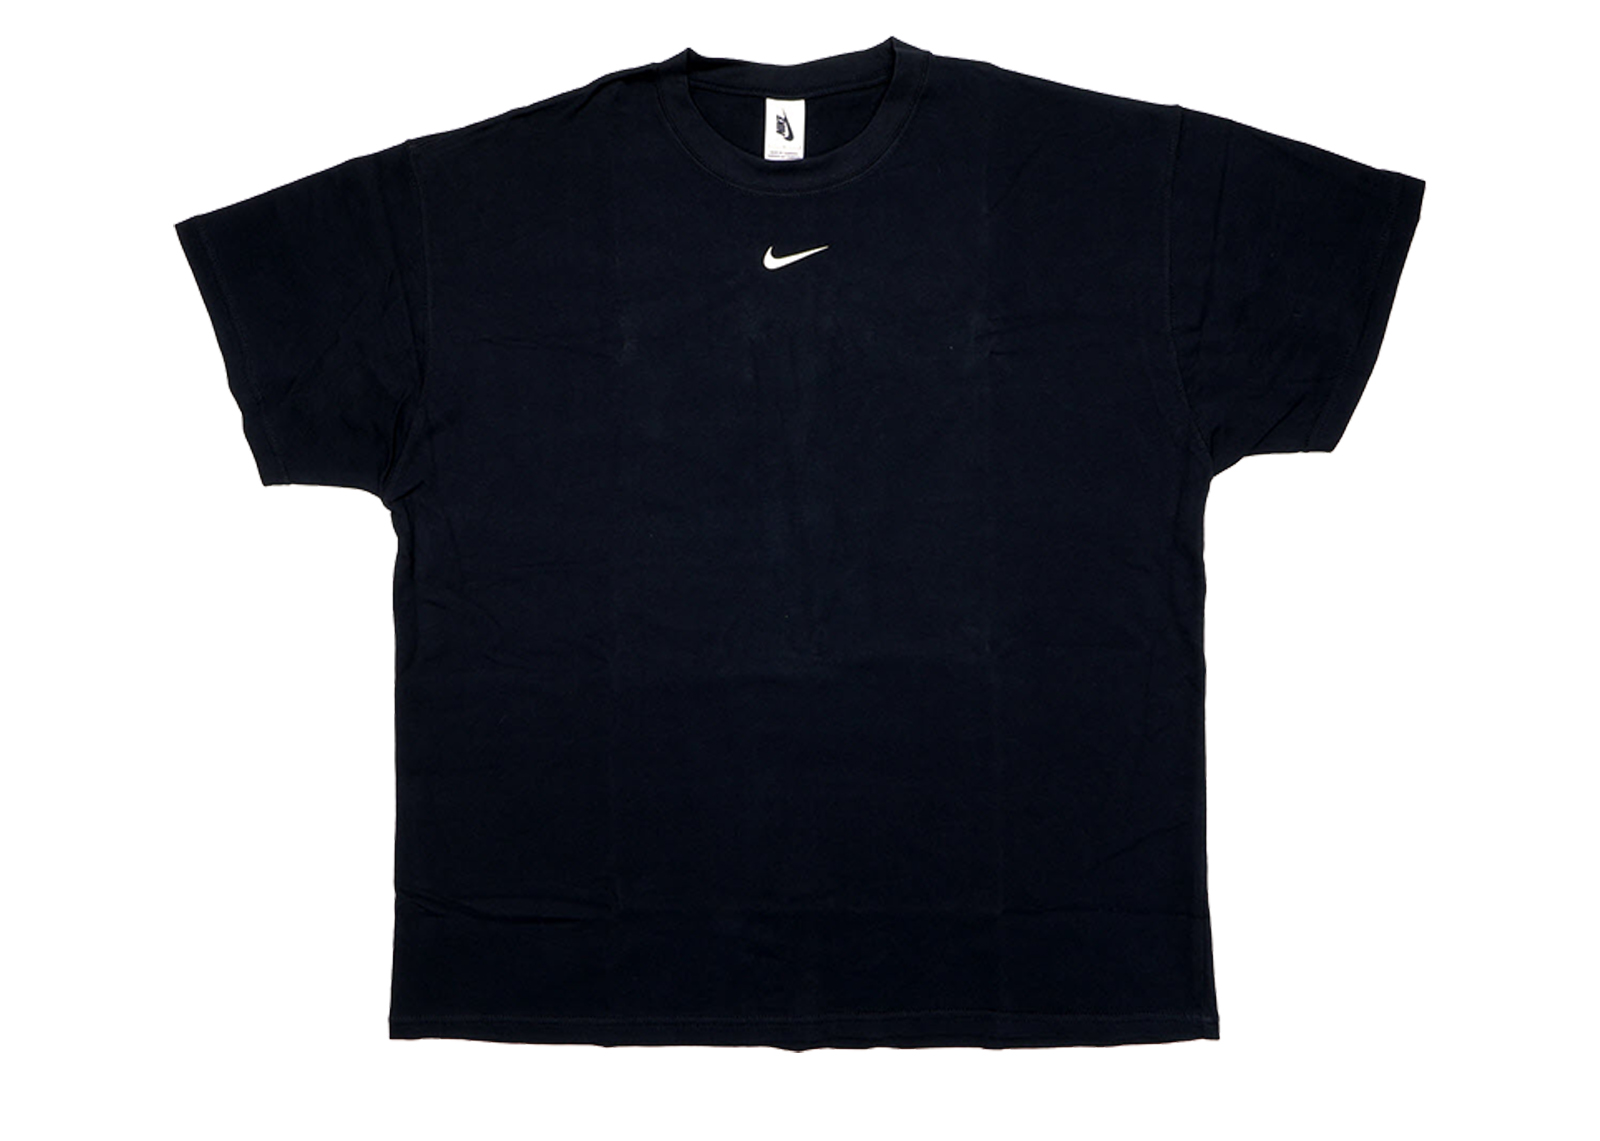 Fear of God x Nike Air Fog T‑Shirt Black - Novelship